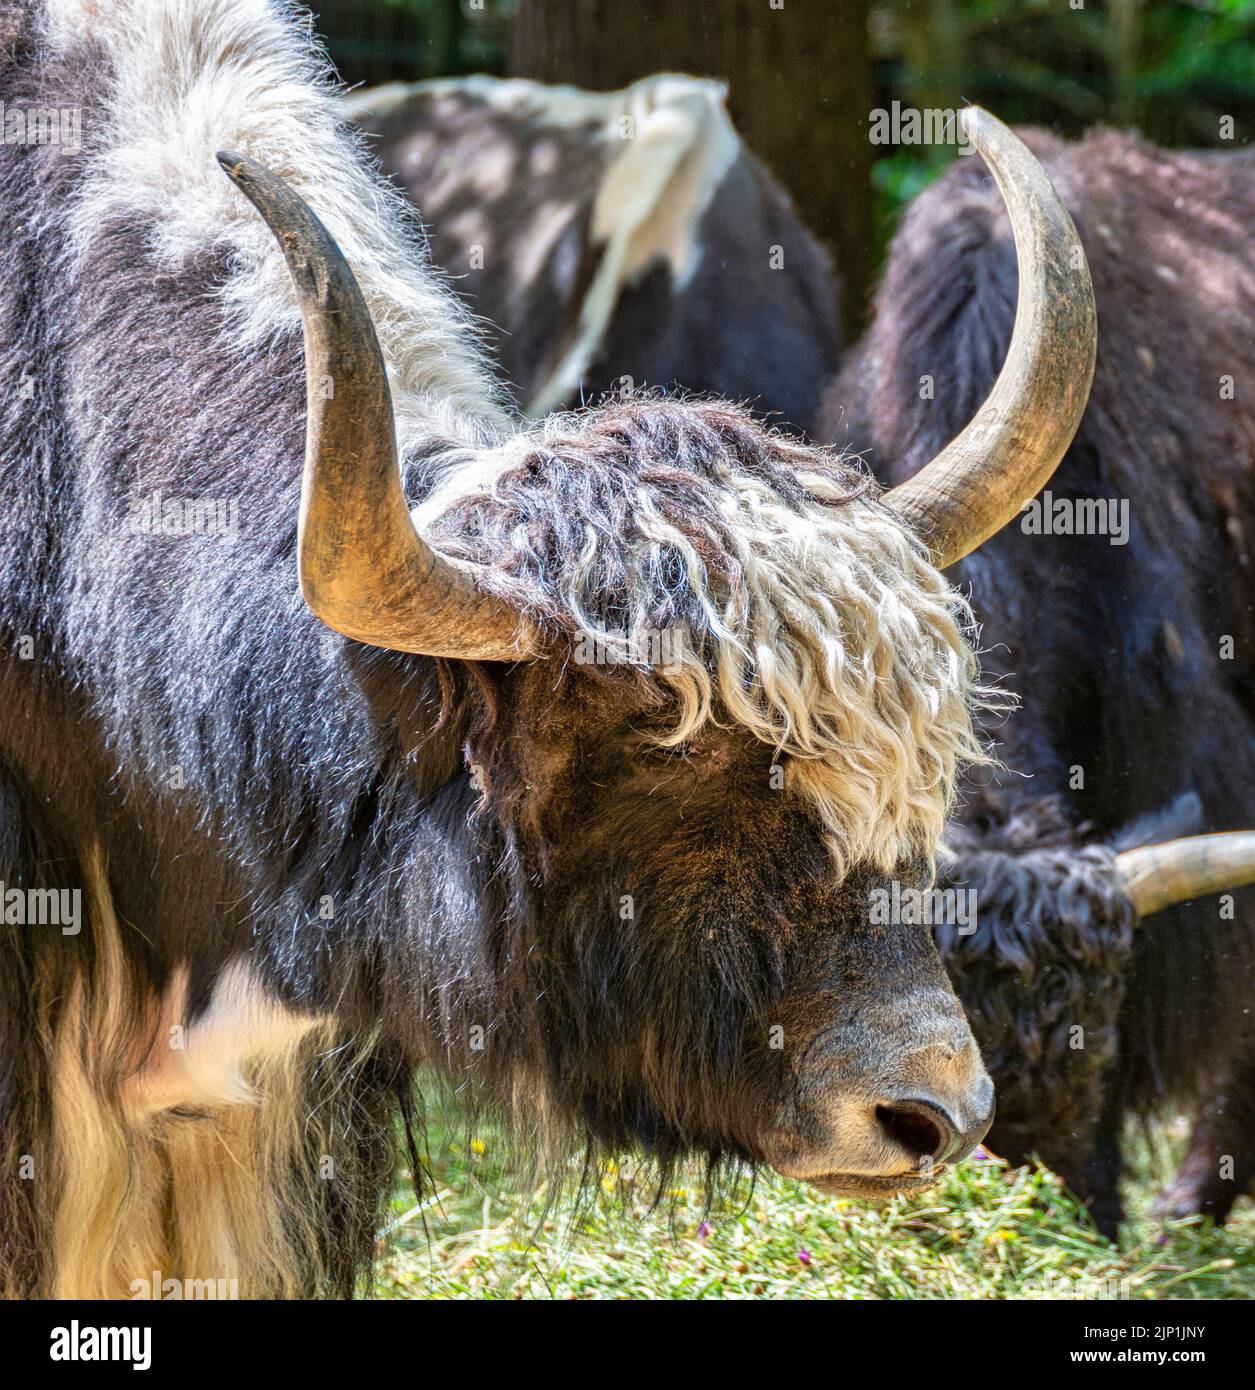 yak, bos mutus, yaks Stock Photo